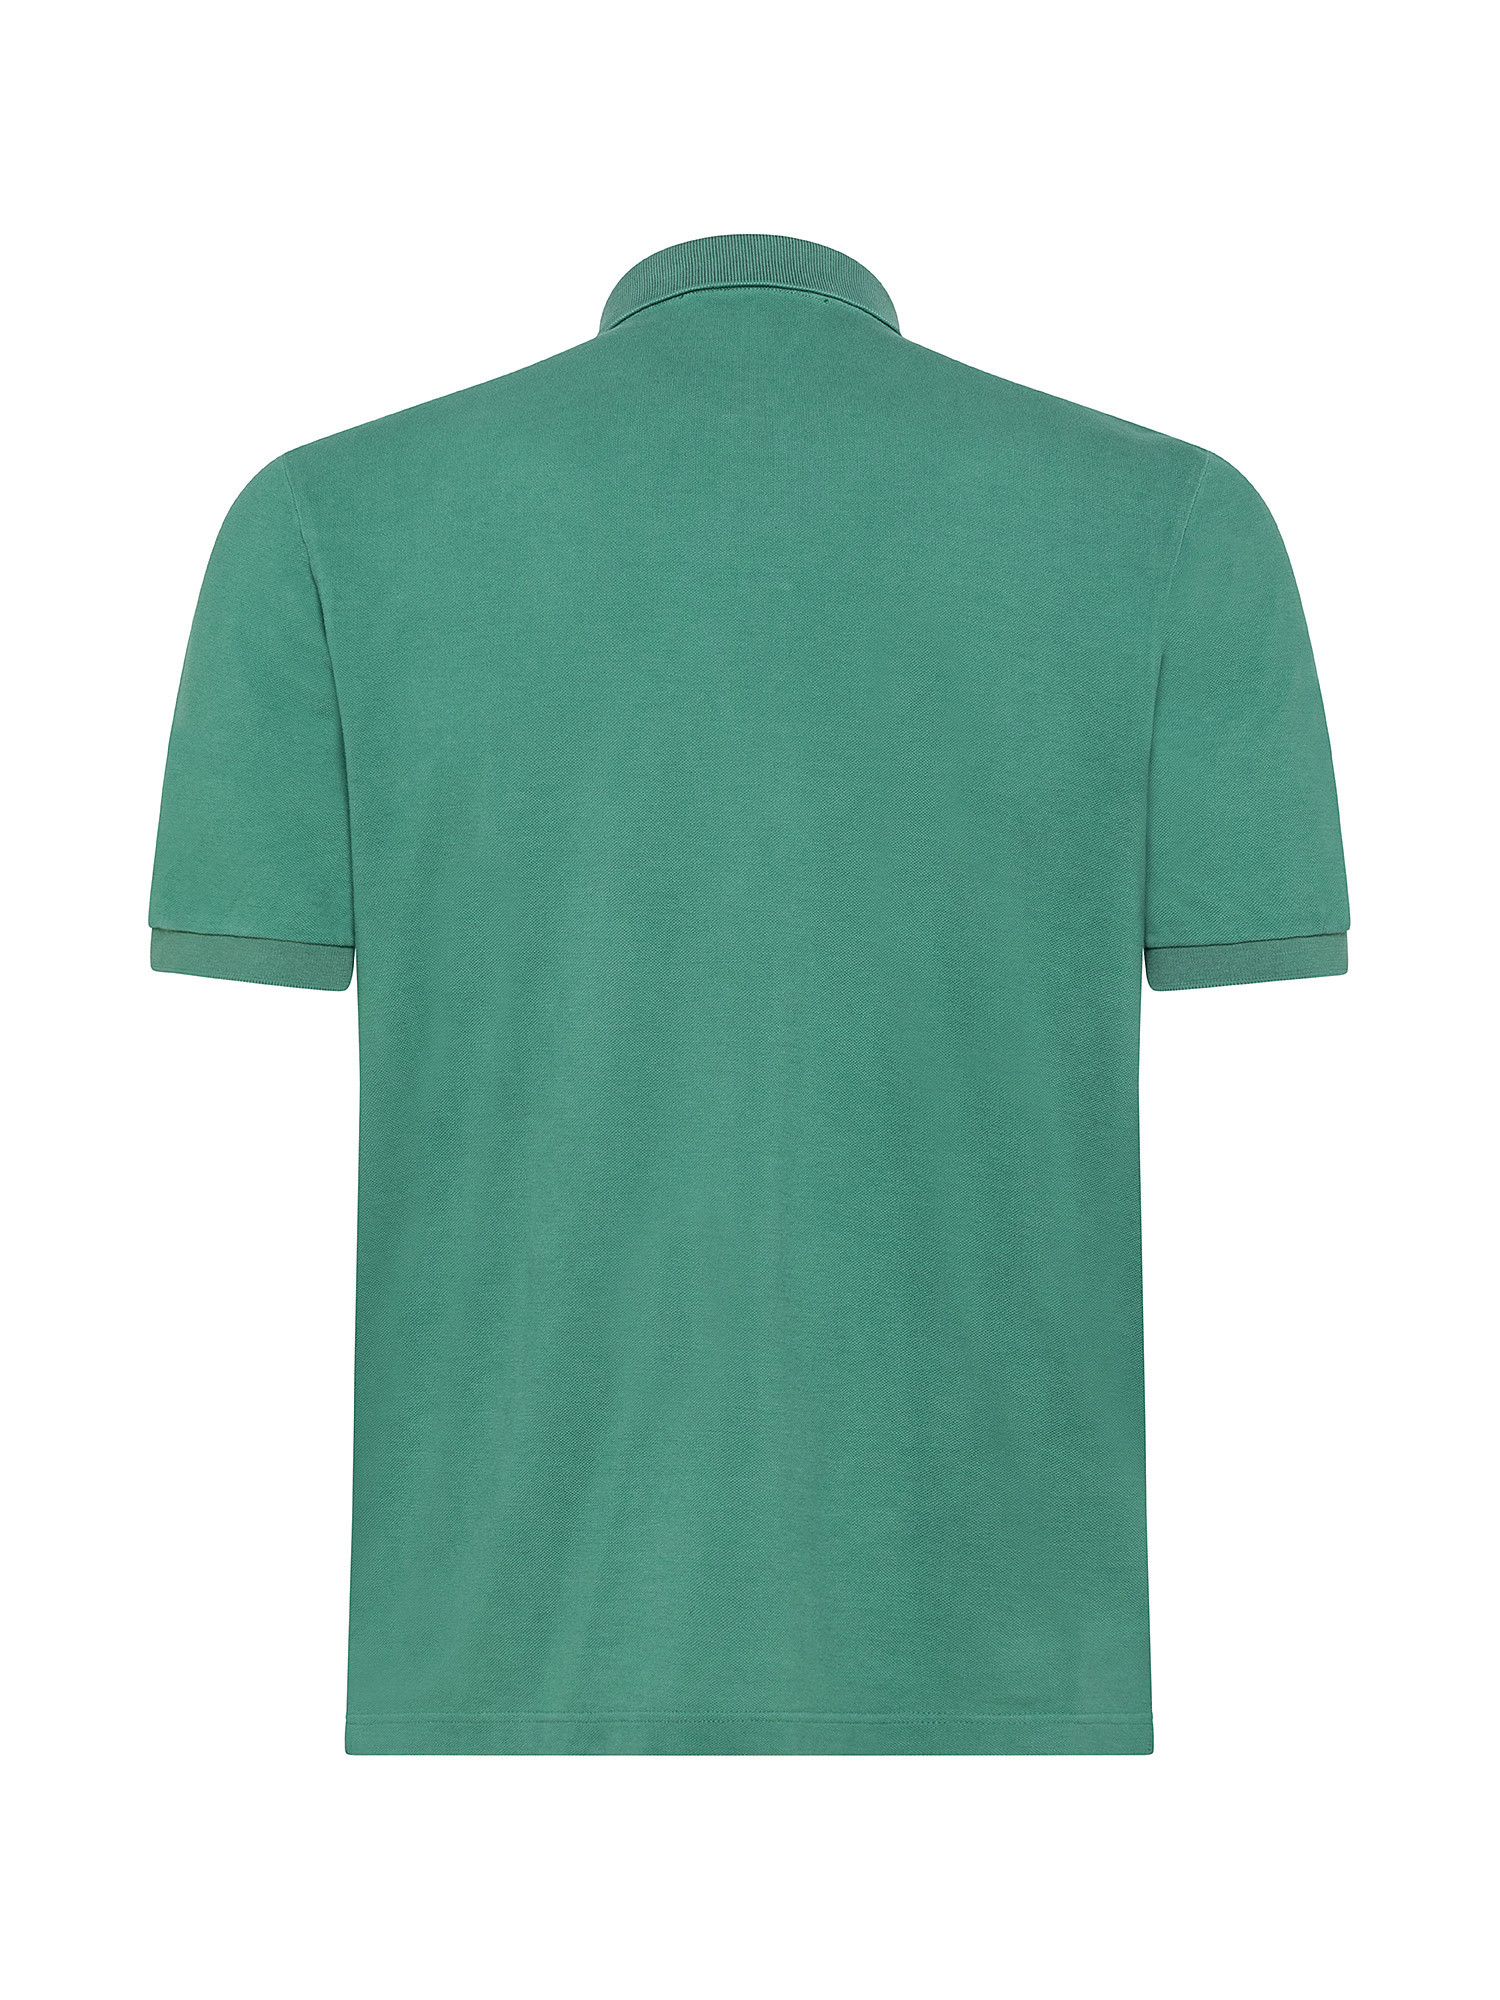 Vintage effect short sleeve polo shirt, Light Green, large image number 1